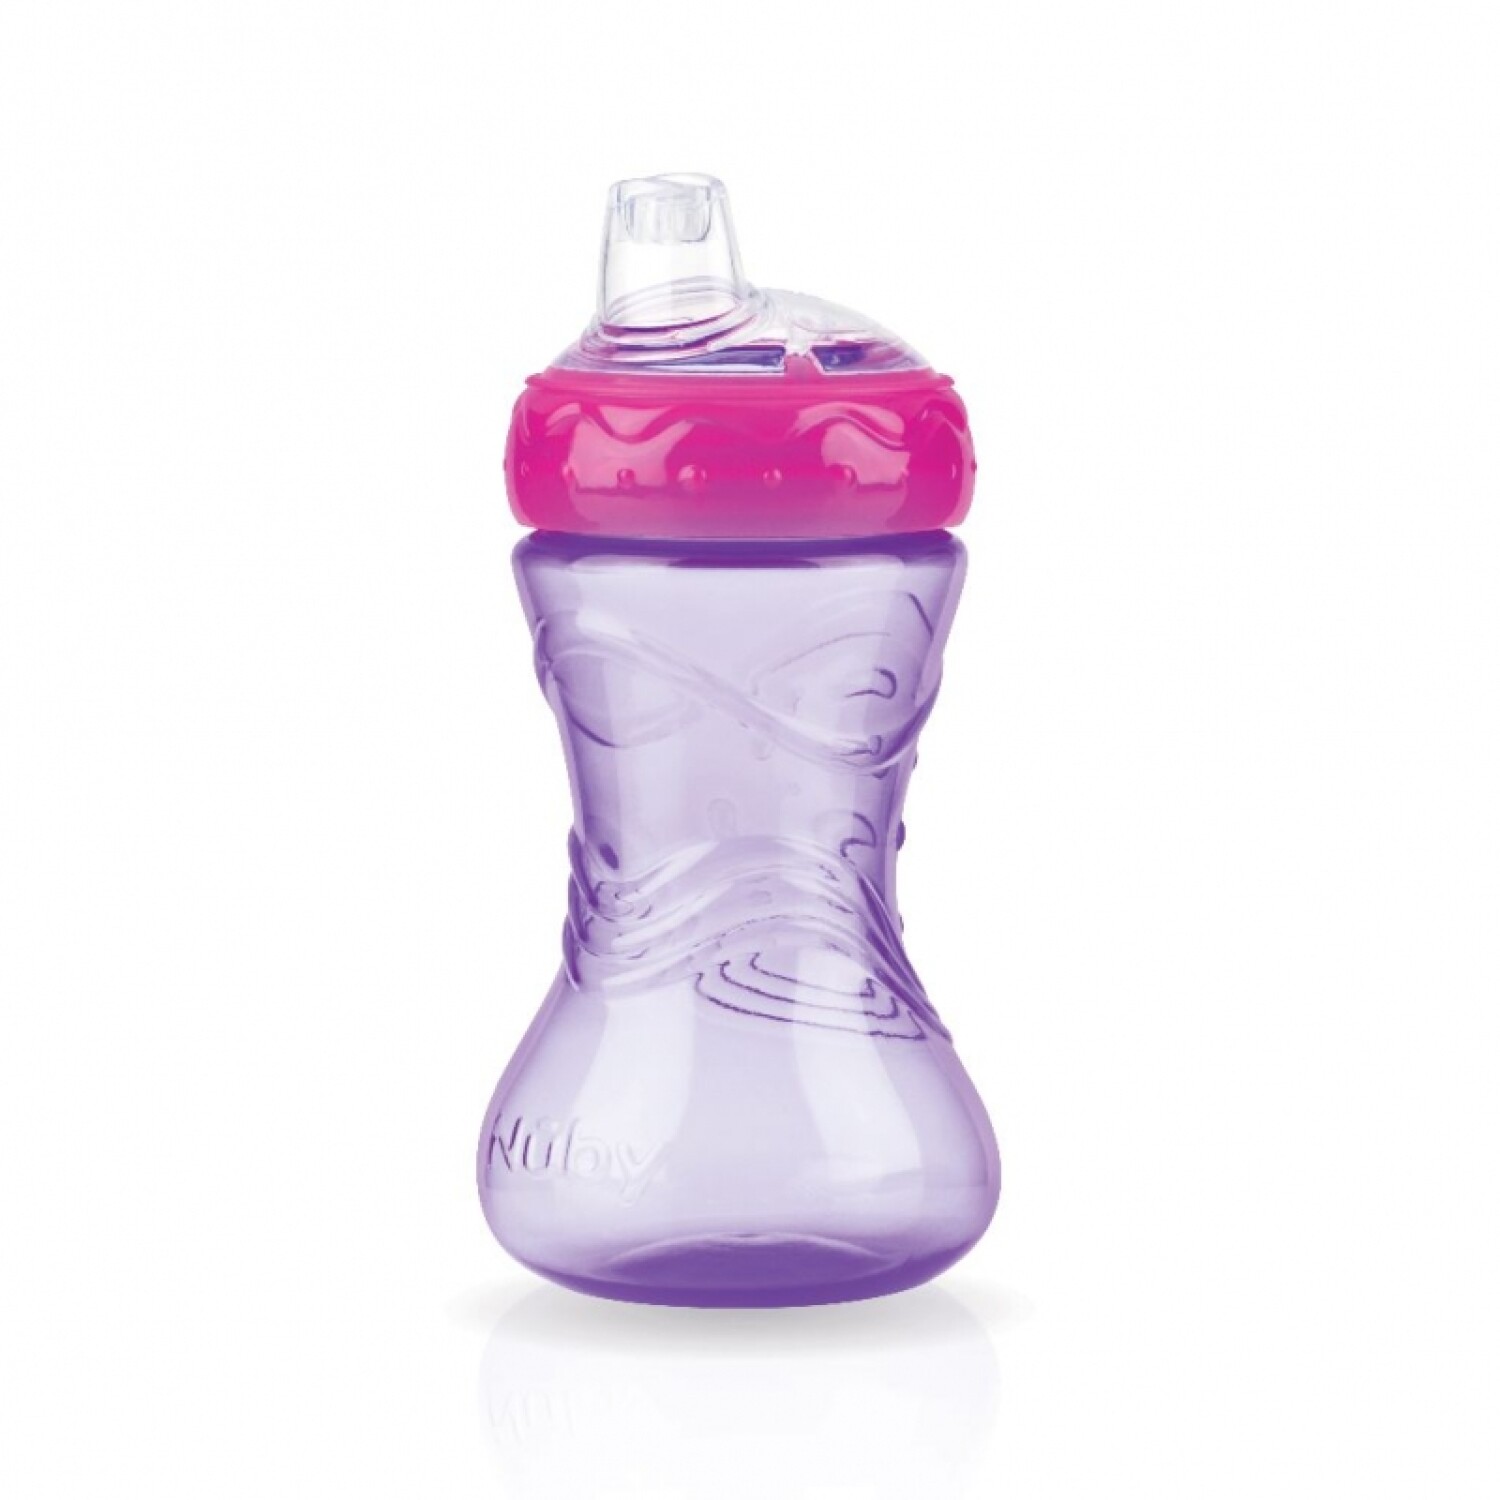 Vaso de Silicona con Asita para Bebe (Colores Surtidos) – Kael